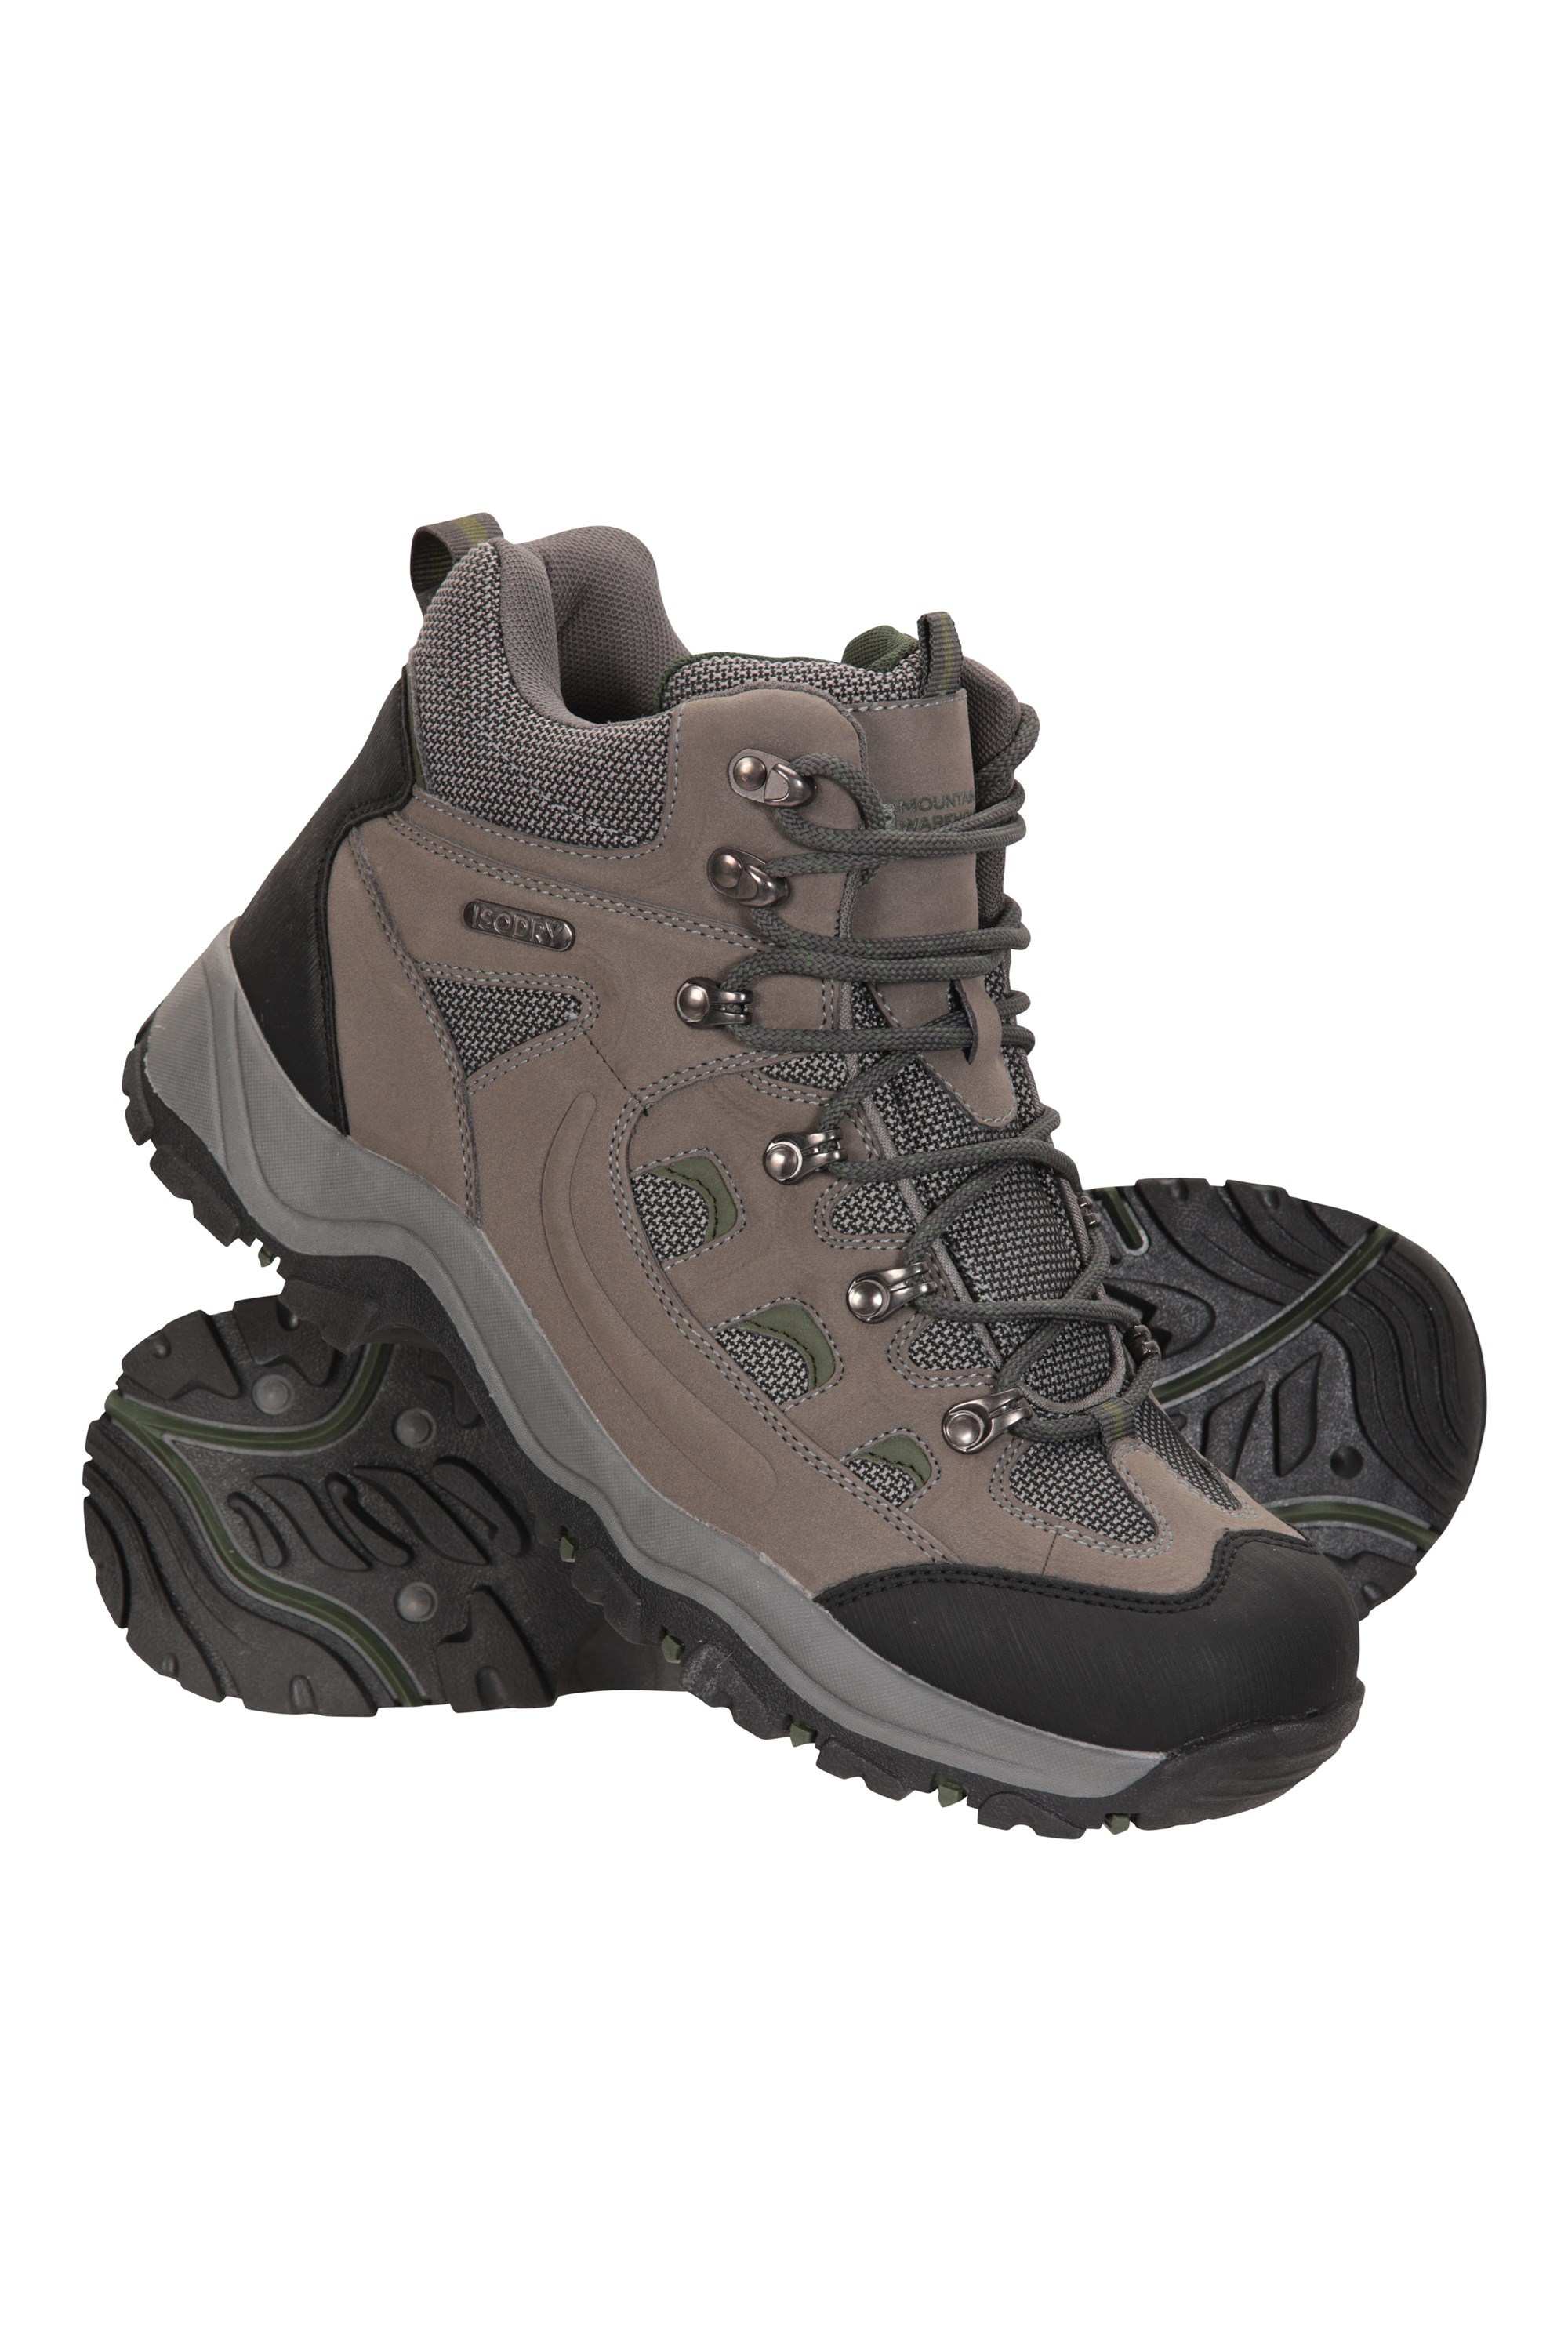 Mountain Warehouse Mens Waterproof Hiking Boots Walking Trekking Camping Boot 